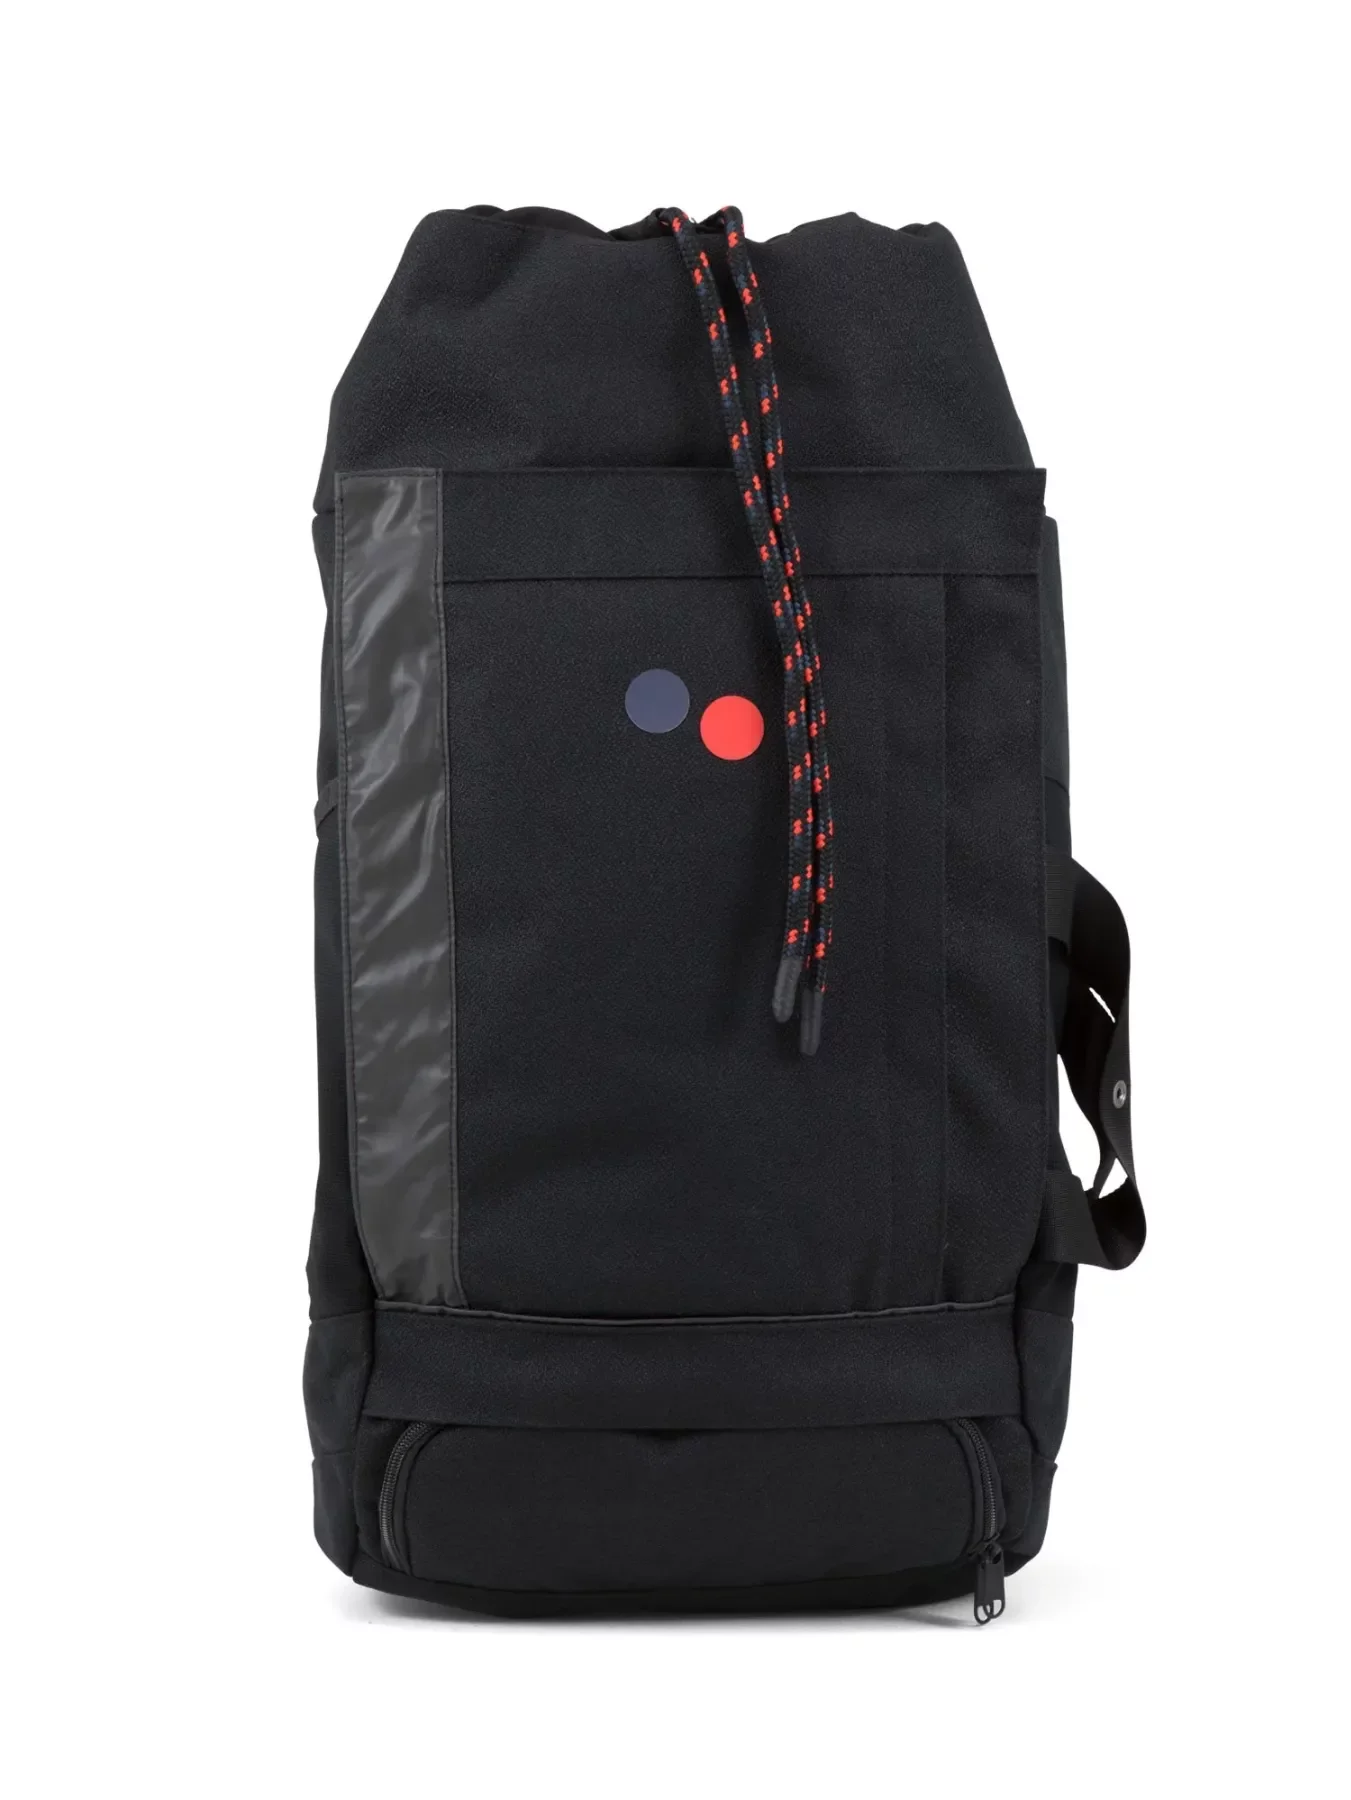 pinqponq Backpack BLOK large - Licorice Black 2